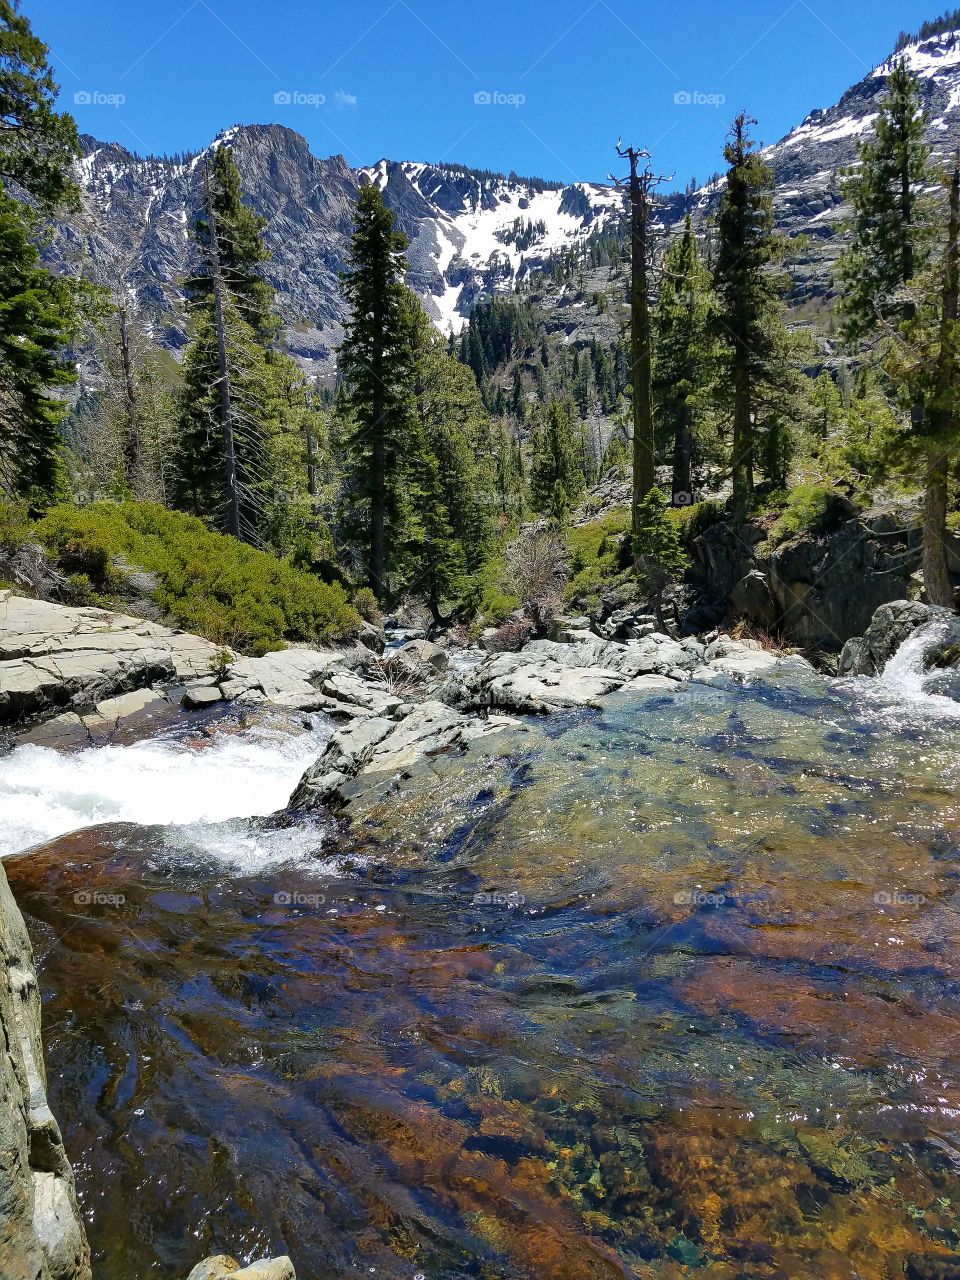 springtime flow in the Sierras